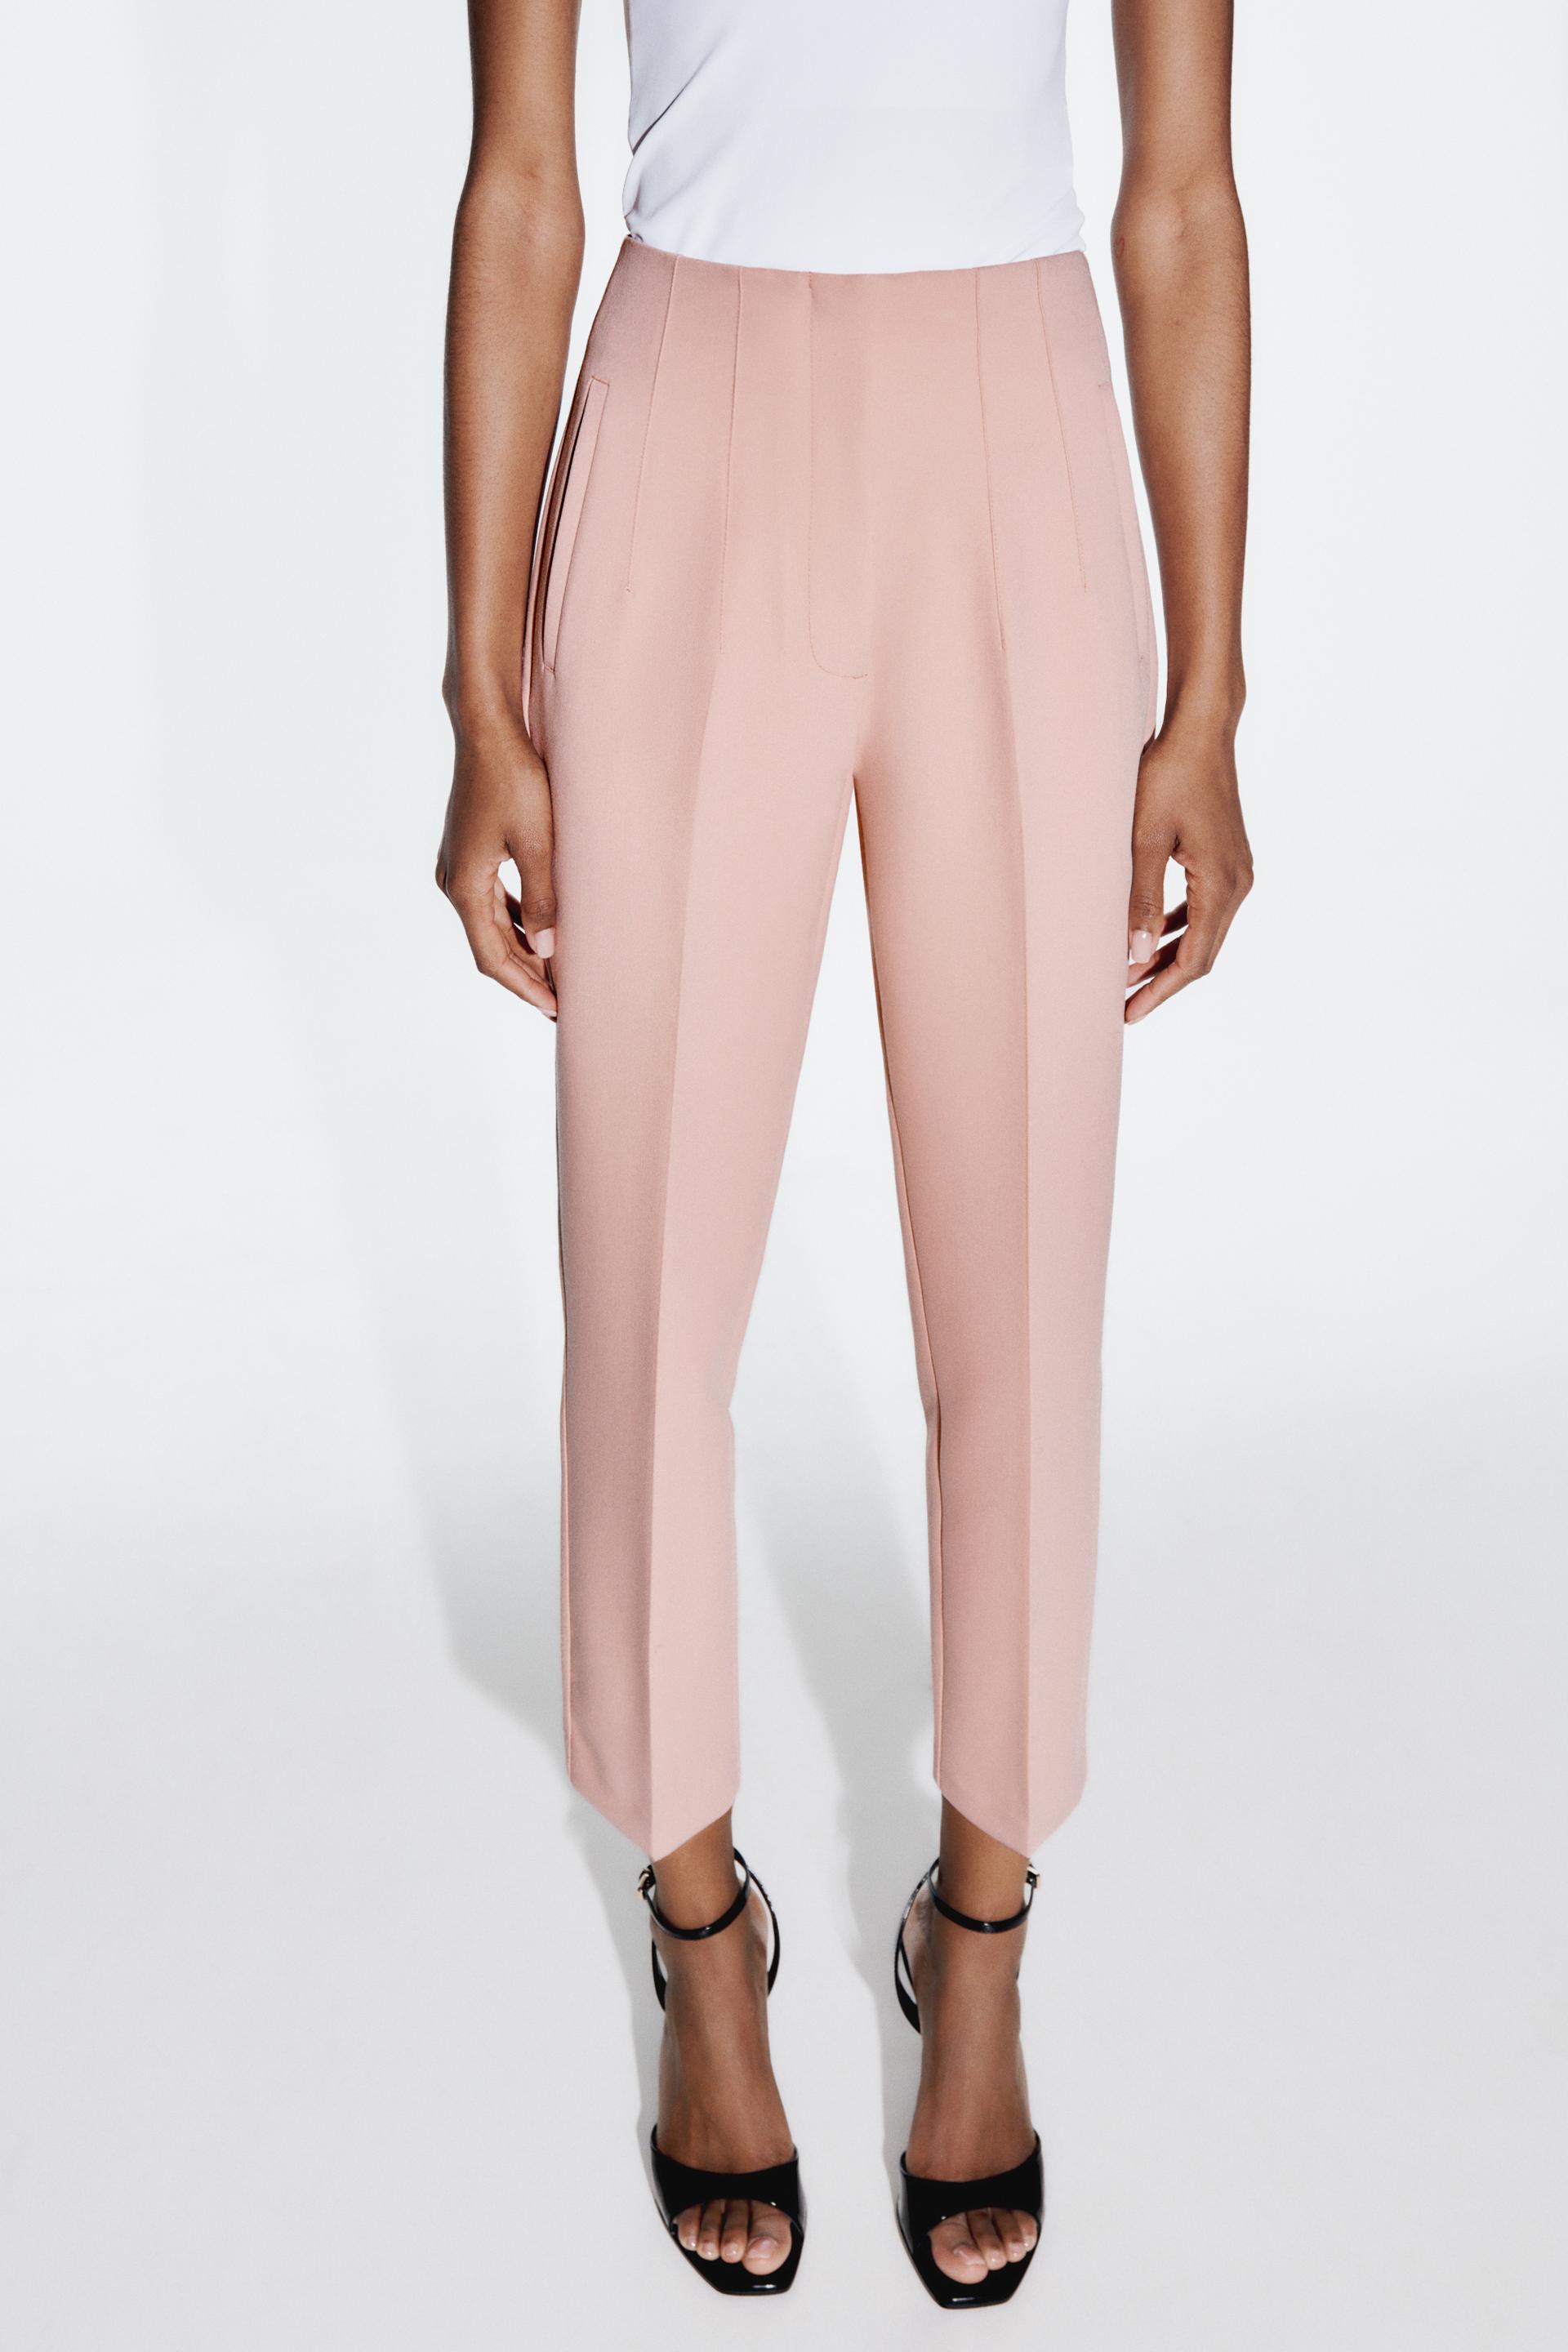 Zara Women High-waist trousers with belt 4387/030/800 (Small): Buy